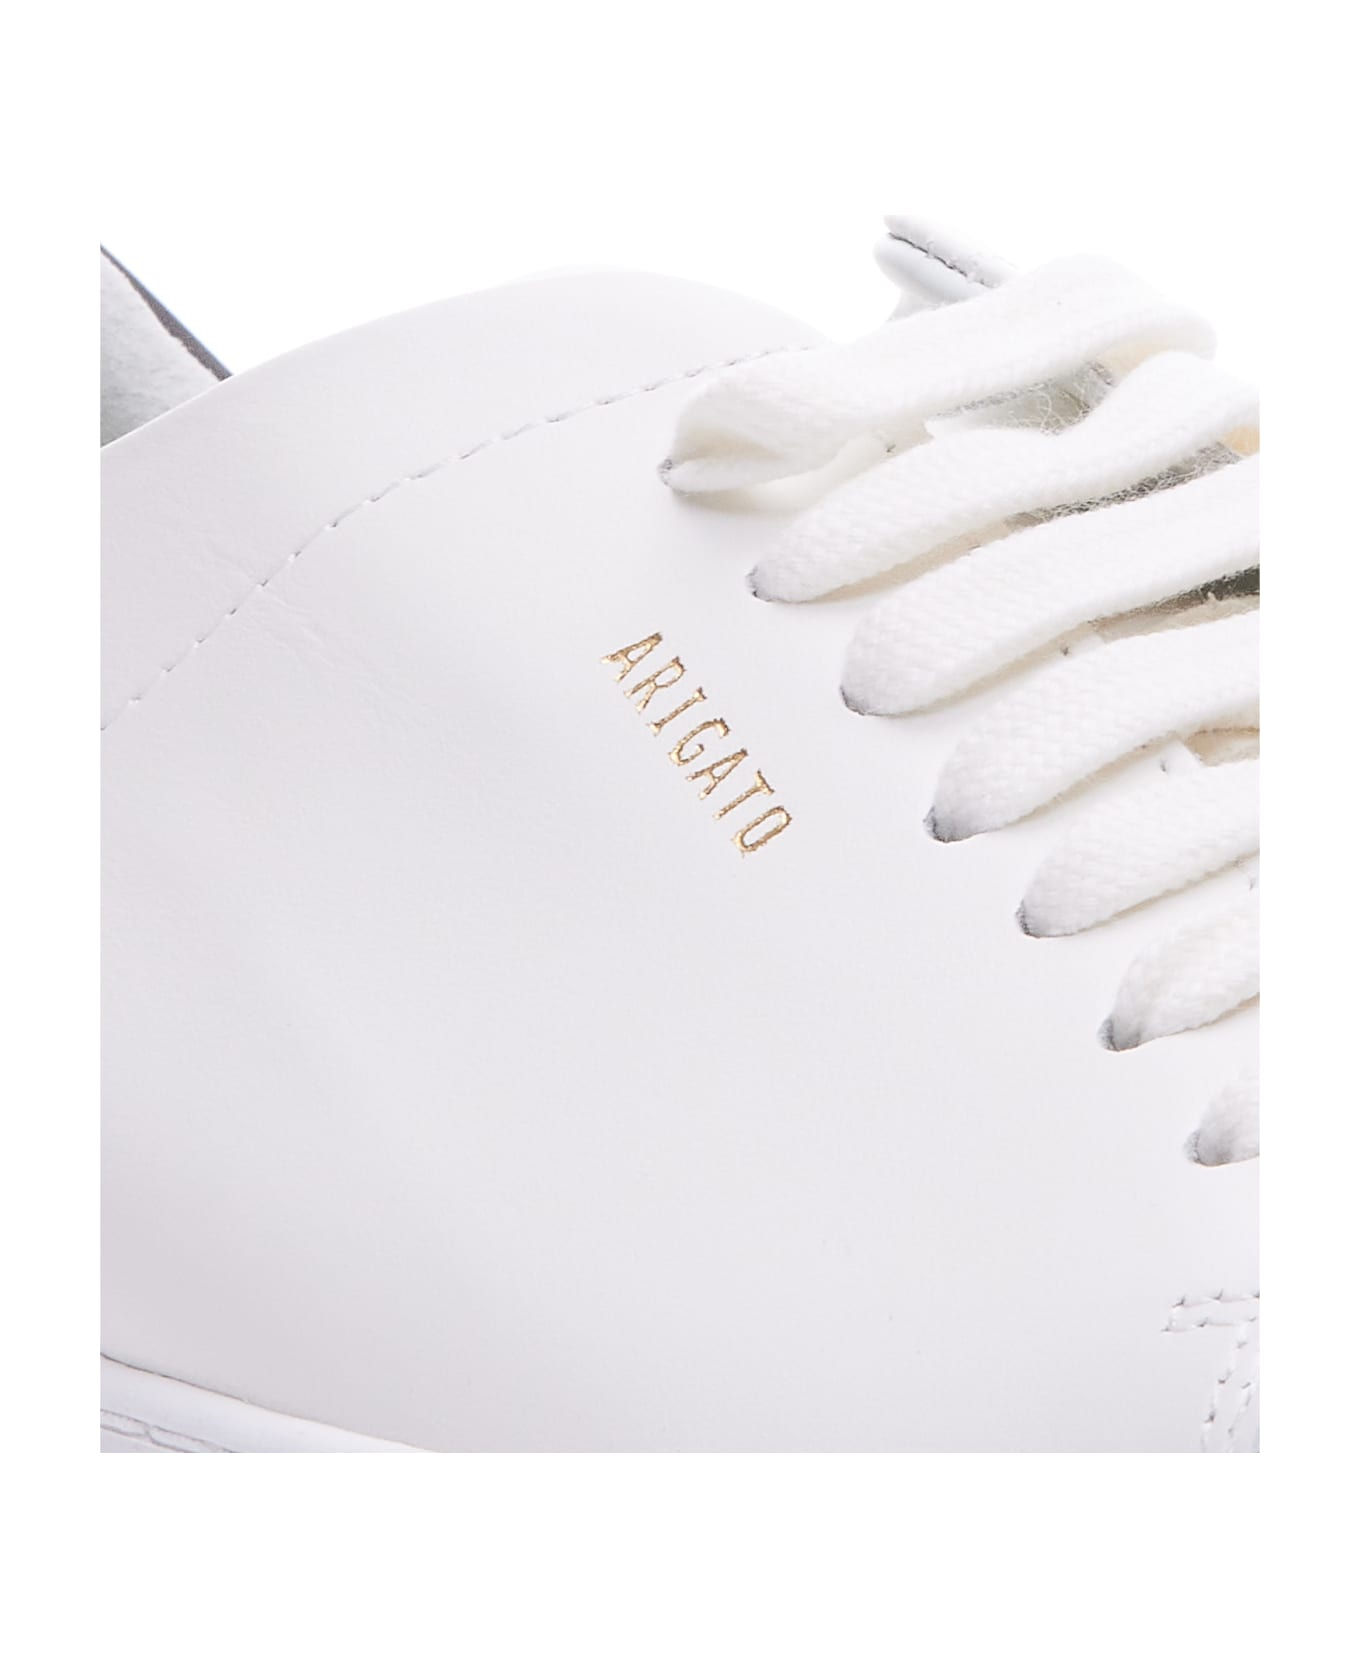 Axel Arigato Clean 90 Sneakers - White/black スニーカー